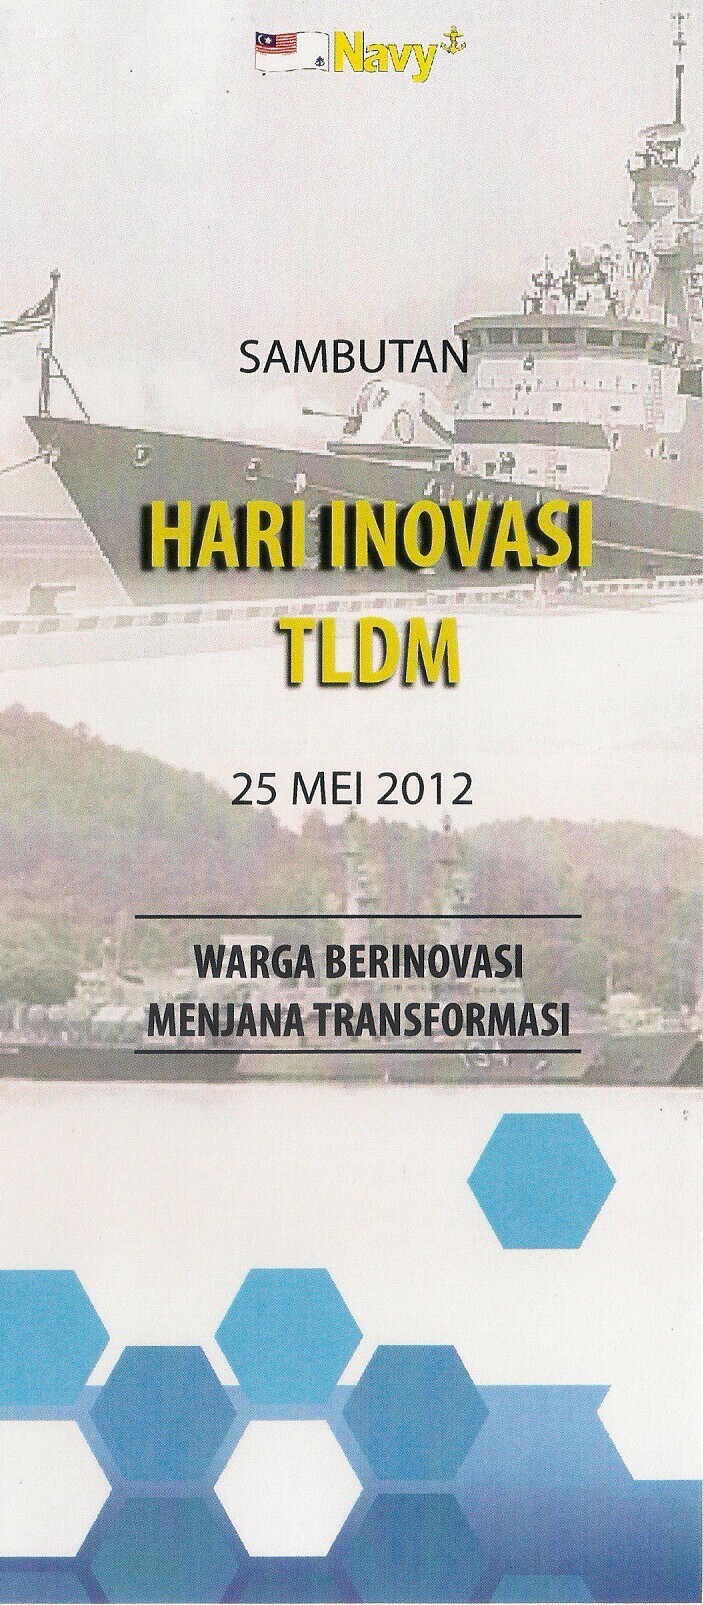 Aturcara Hari Inovasi TLDM 2012 page 1